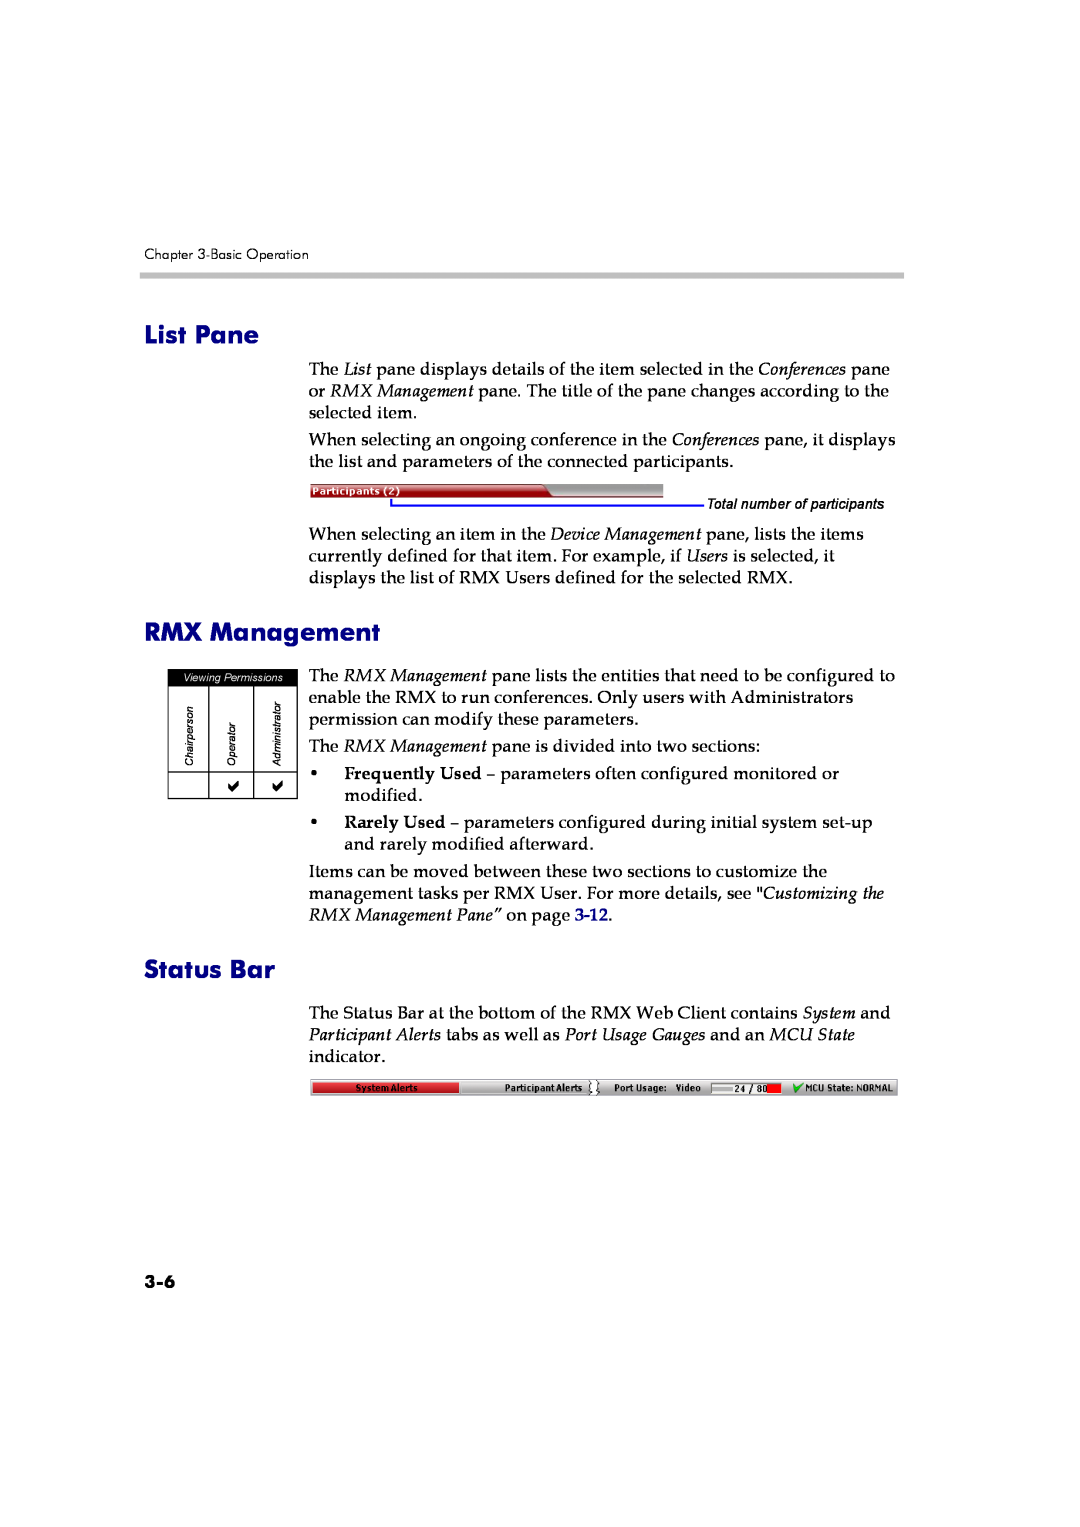 Polycom DOC2560B manual List Pane, RMX Management, Status Bar 